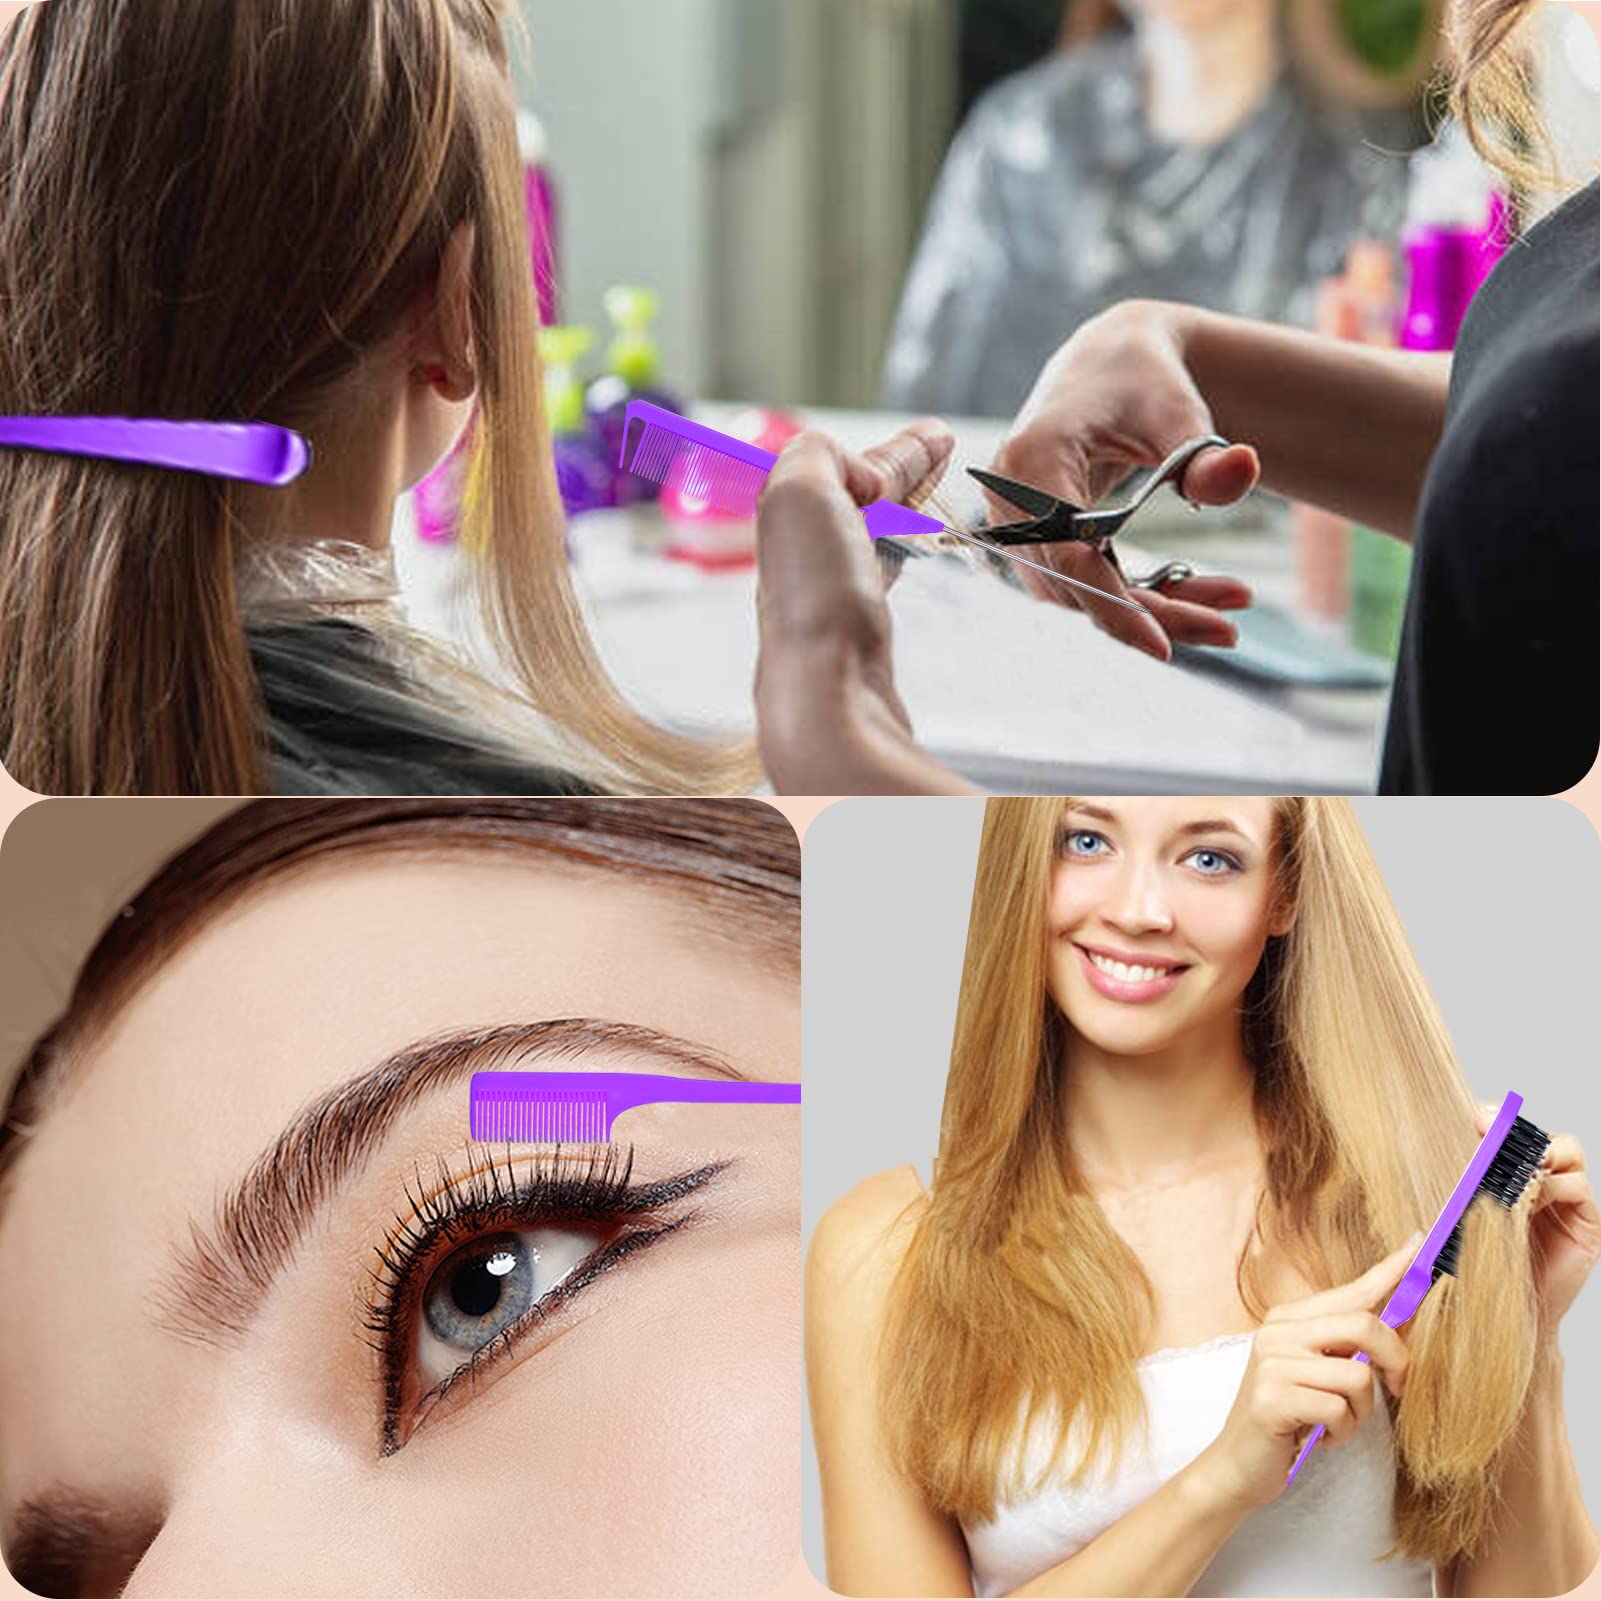 18 Pieces Hair Styling Comb Hair Brush Set, Nylon Teasing Hair Brush Rat Tail Comb